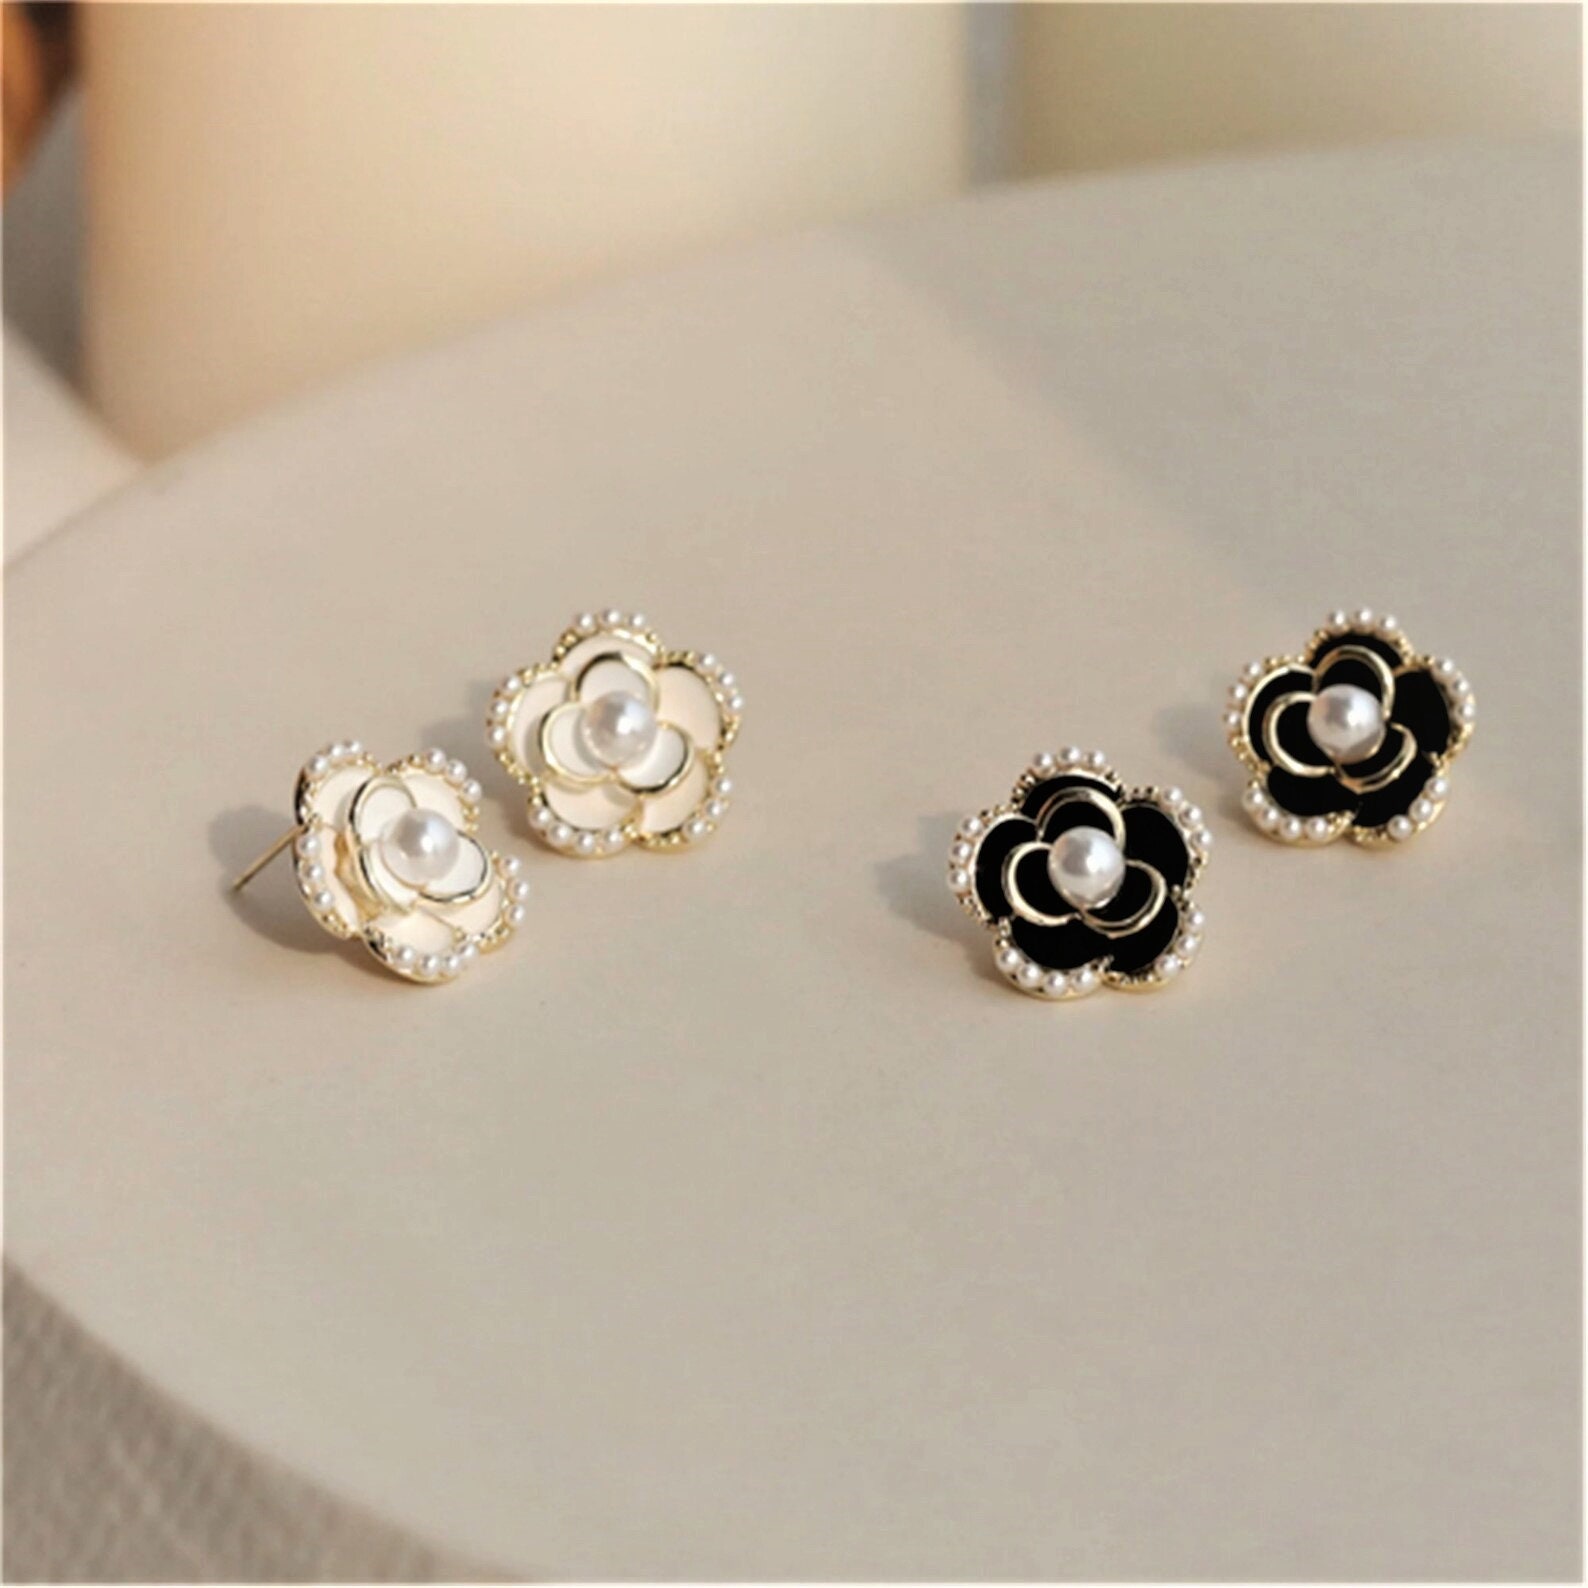 Chanel Necklace, Earrings and Bracelets Set — Chosen Care Company